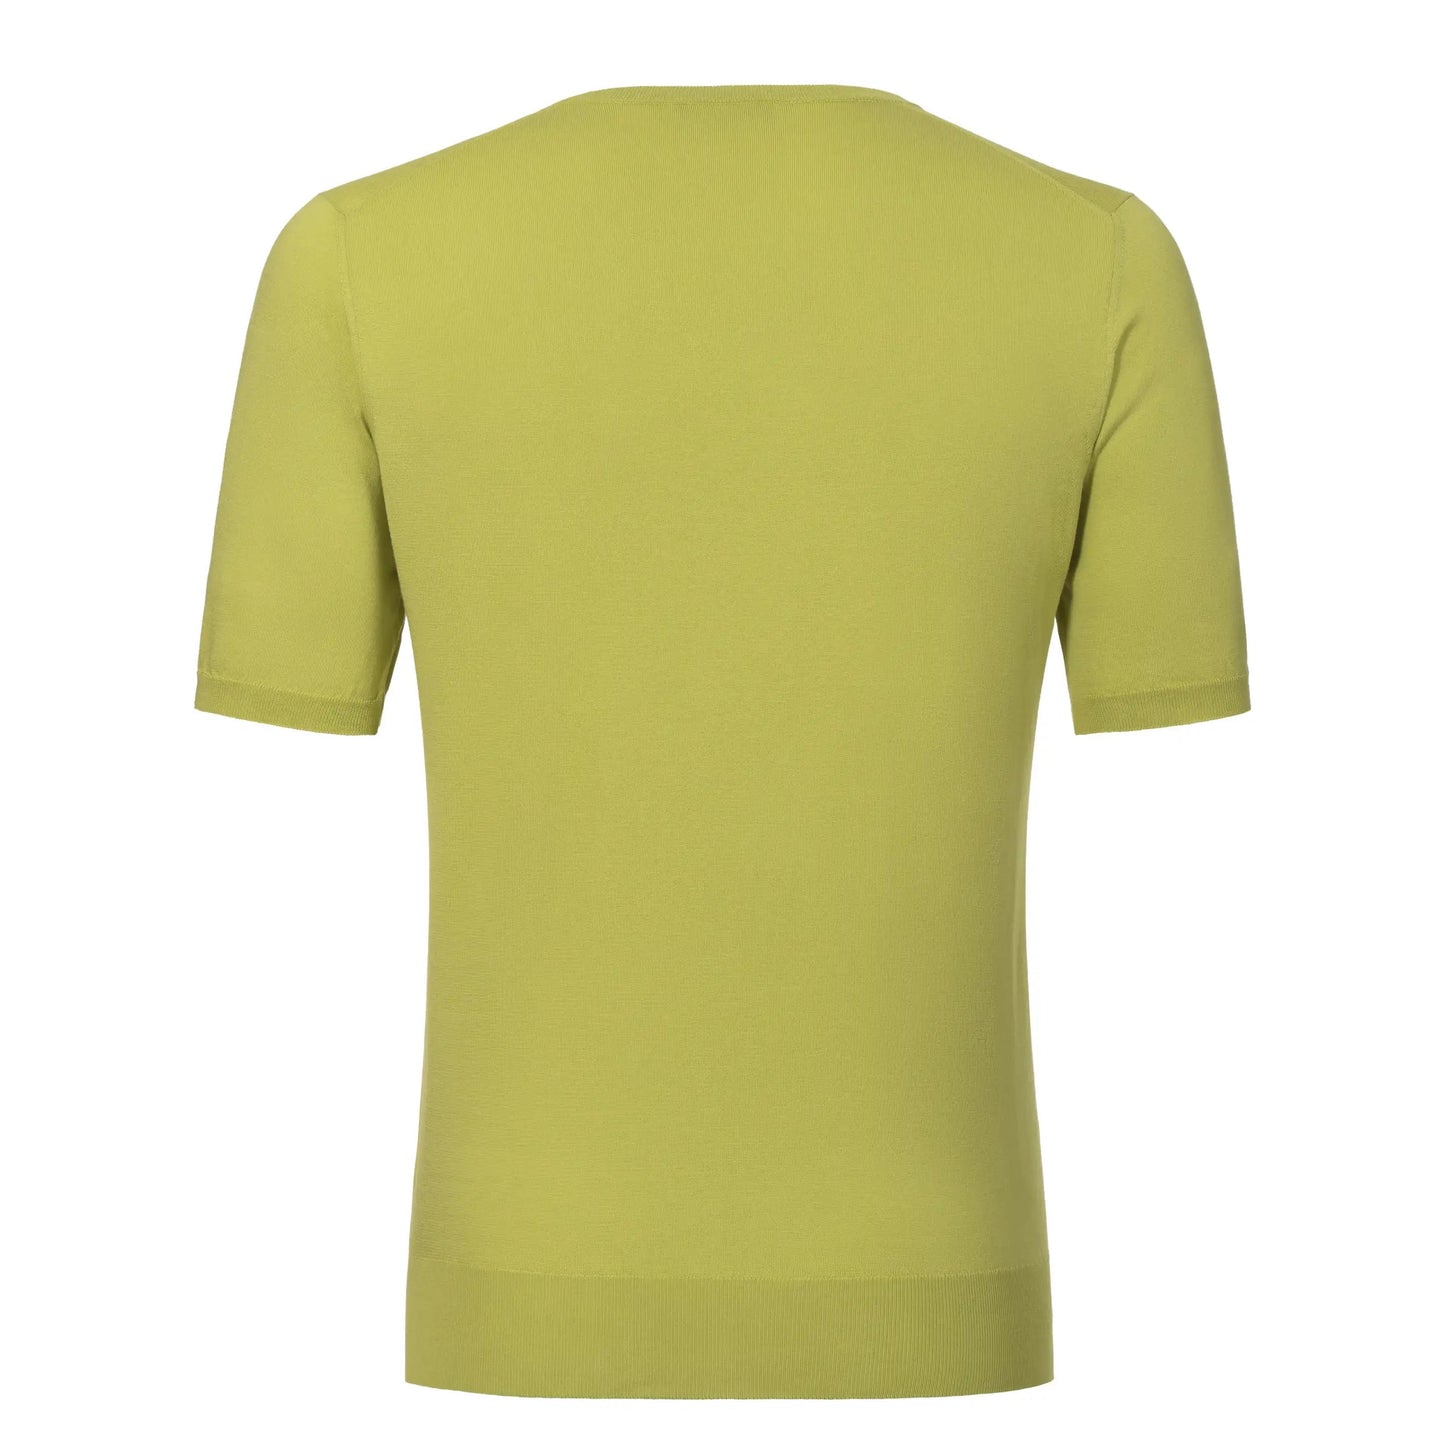 Cruciani Cotton Lime Green T-Shirt Sweater - SARTALE